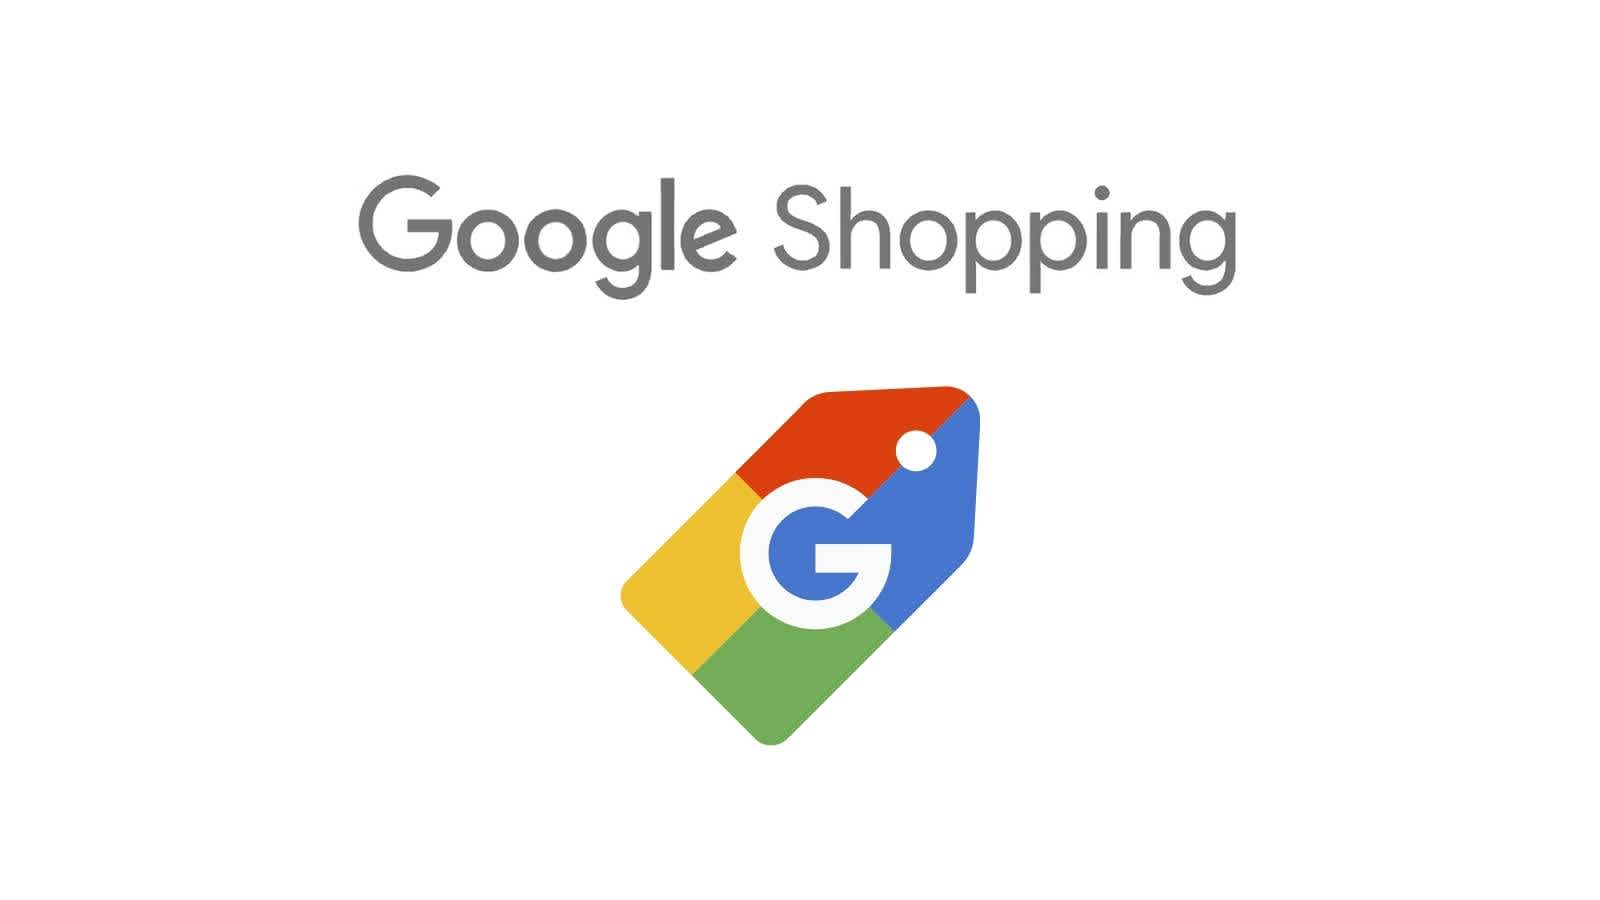 Google Shopping logo_1600x900